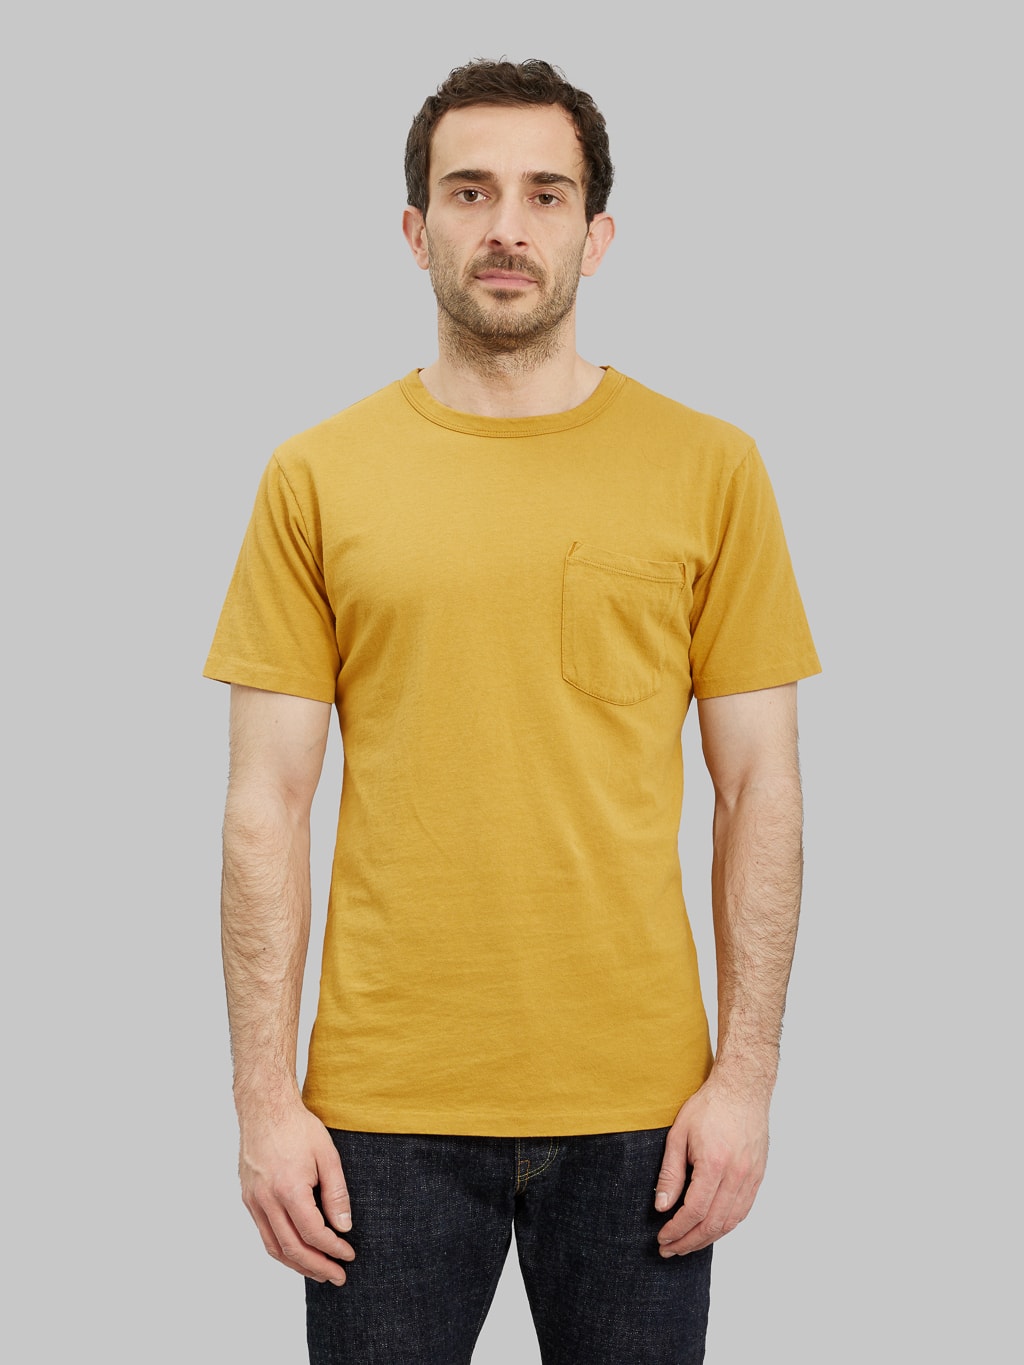 freenote cloth 9 ounce pocket t shirt mustard heavyweight front fit